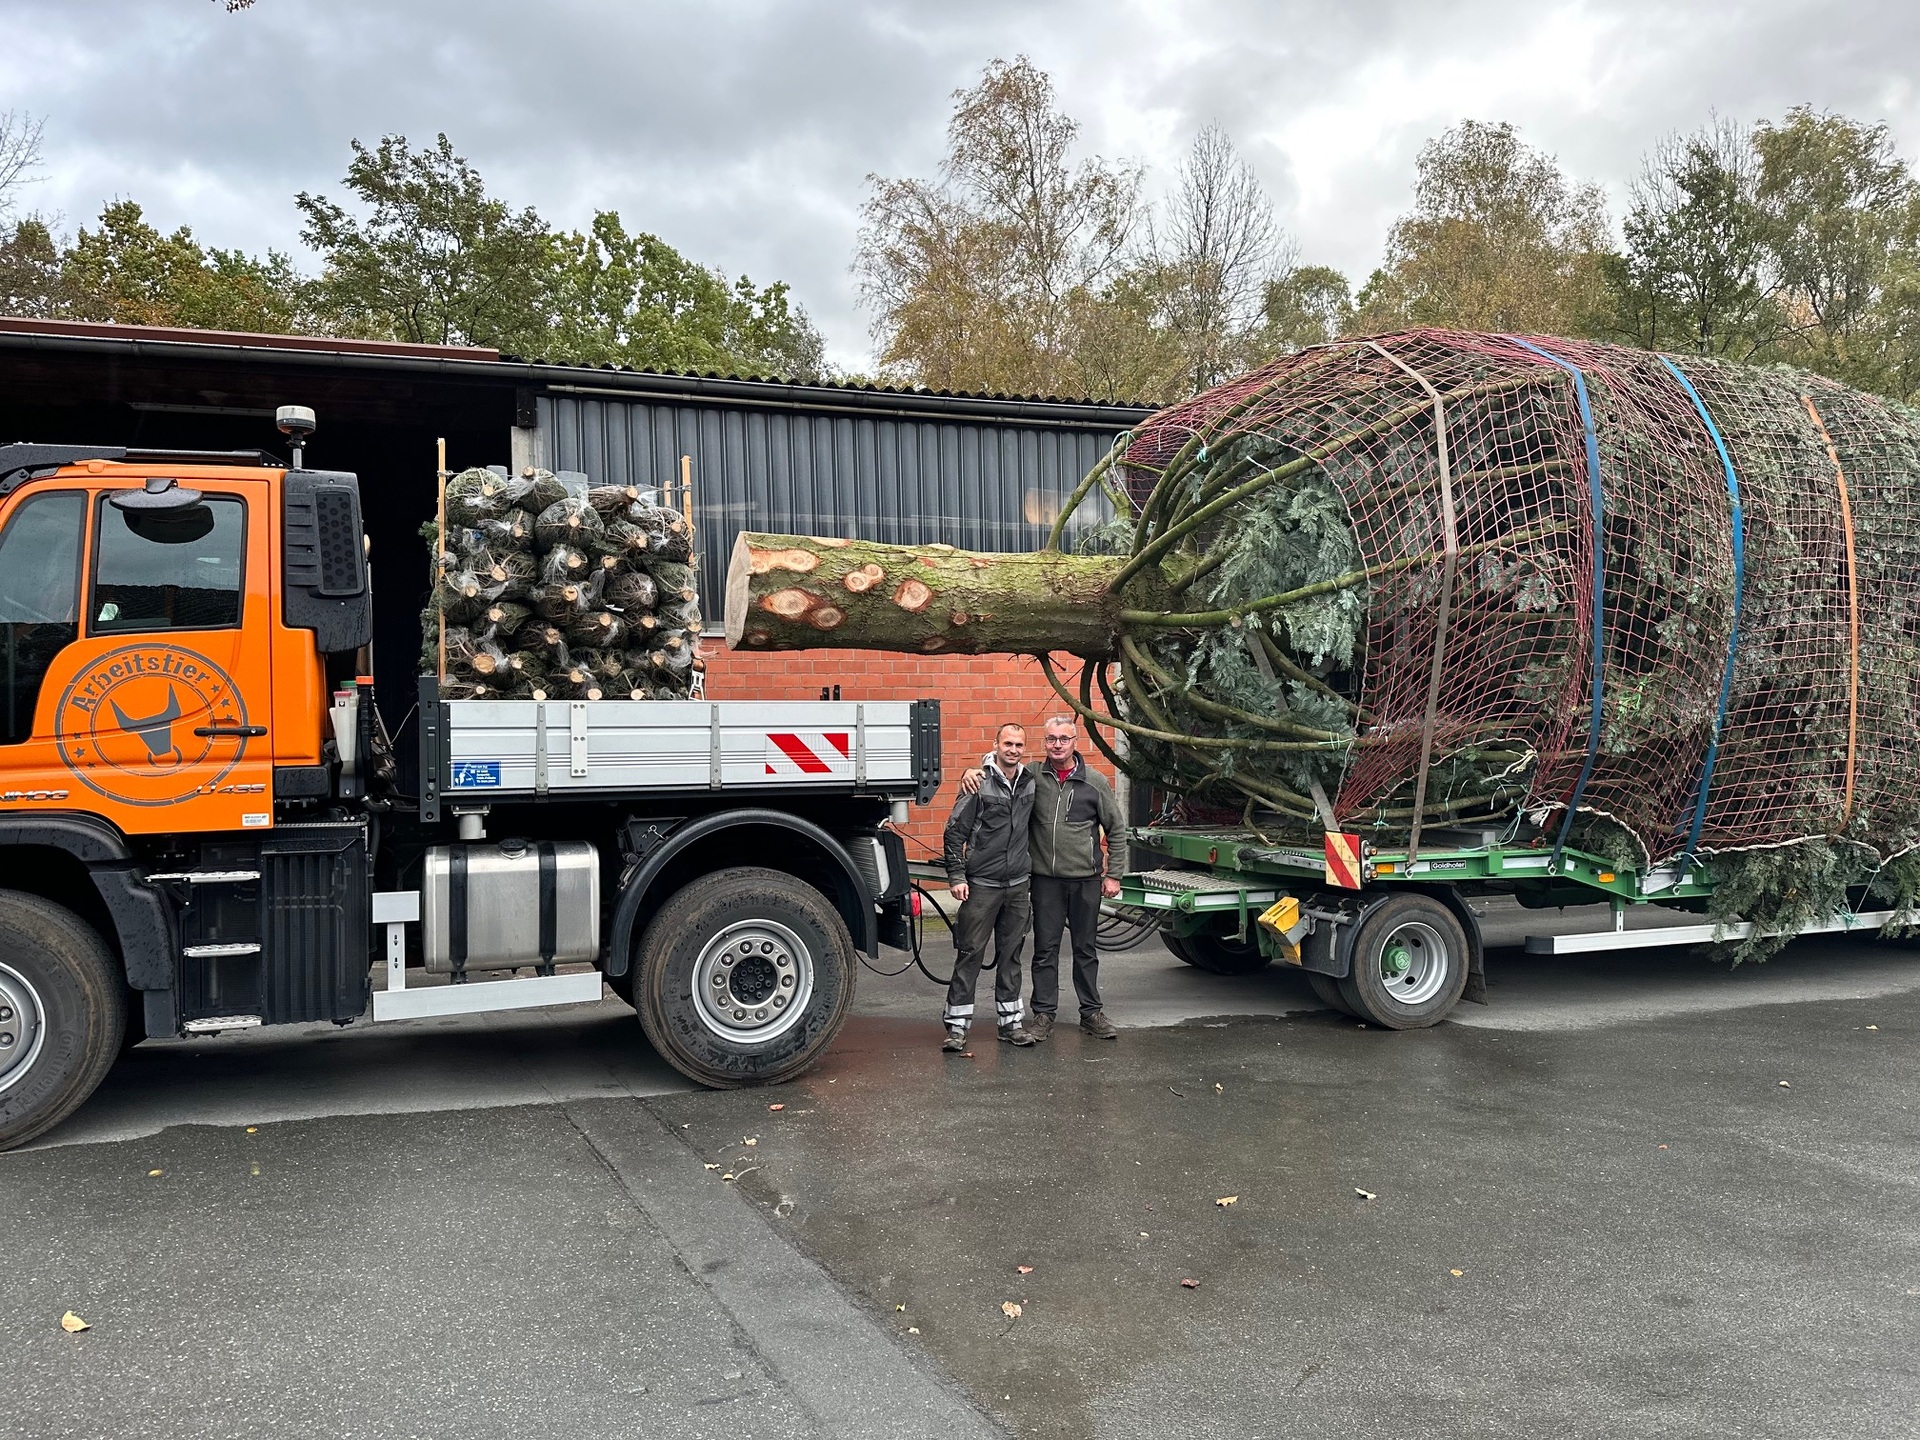 Unimog carries Christmas Tree from Paderborn to Berlin